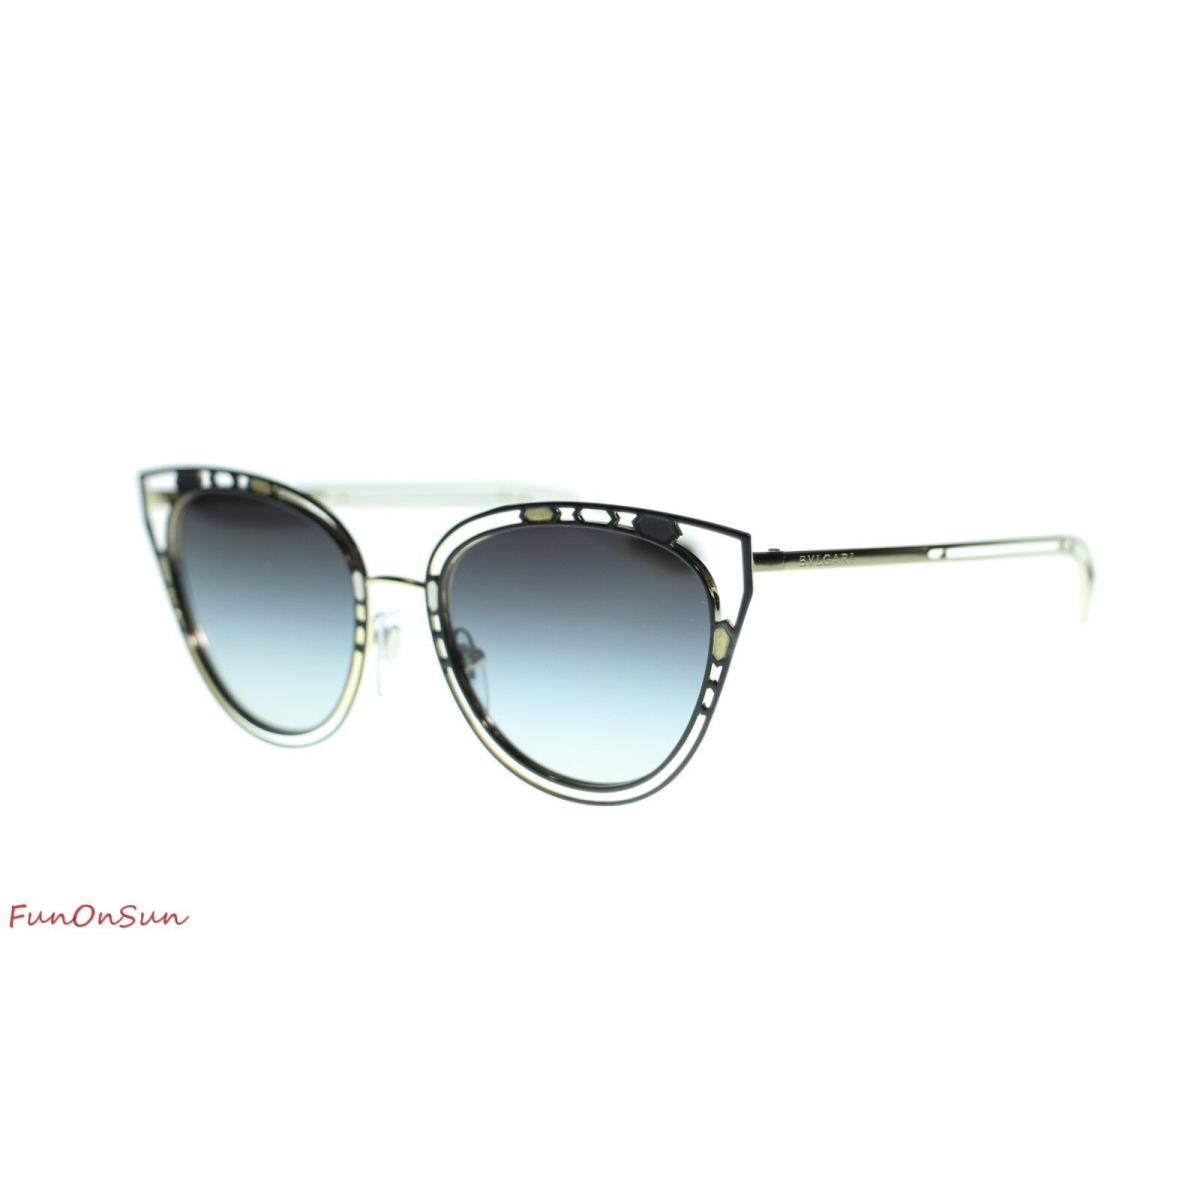 Bvlgari Women`s Cat Eye Sunglasses BV6104 20238G Black Pink Gold/grey Lens 54mm